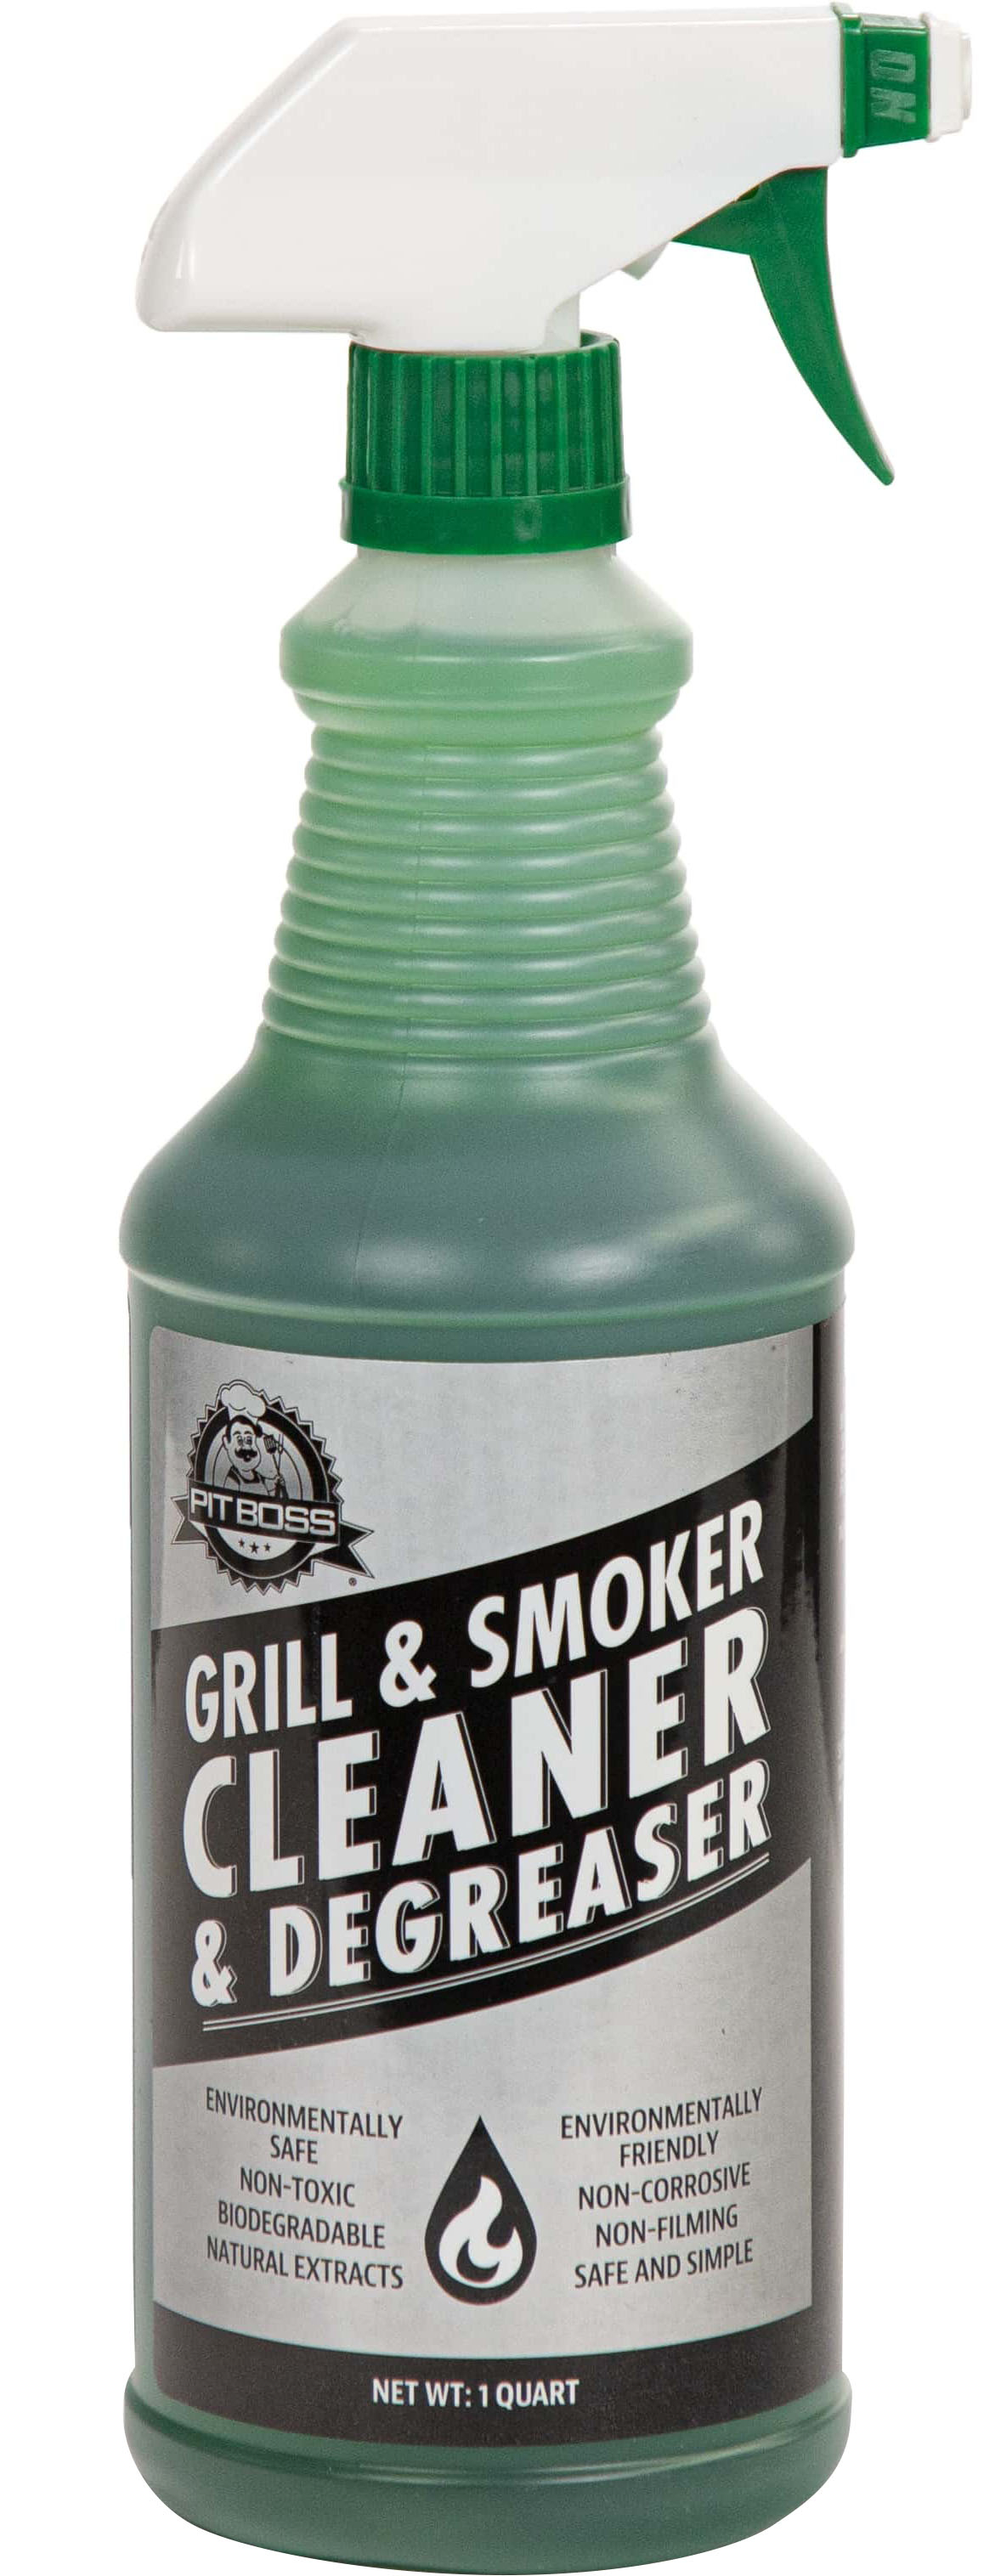 Pit Boss Grill & Smoker Cleaner & Degreaser - 1 Quart